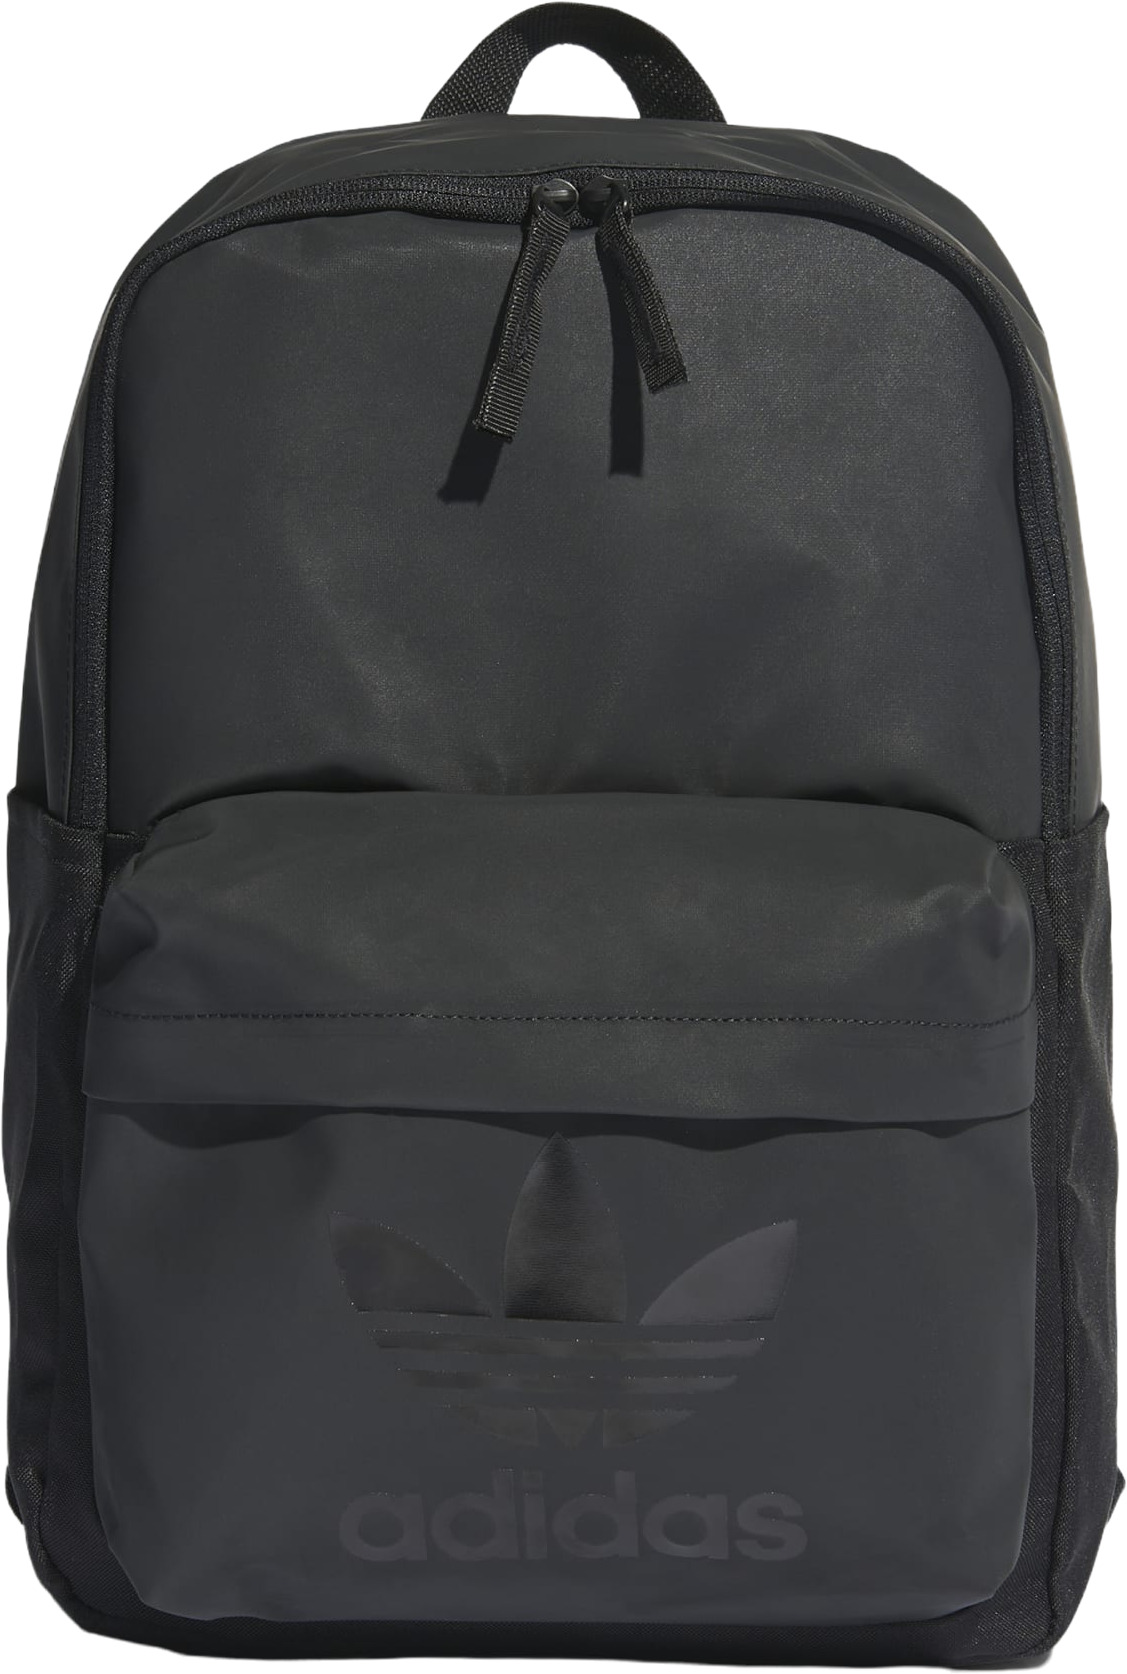 фото Рюкзак adidas backpack черный